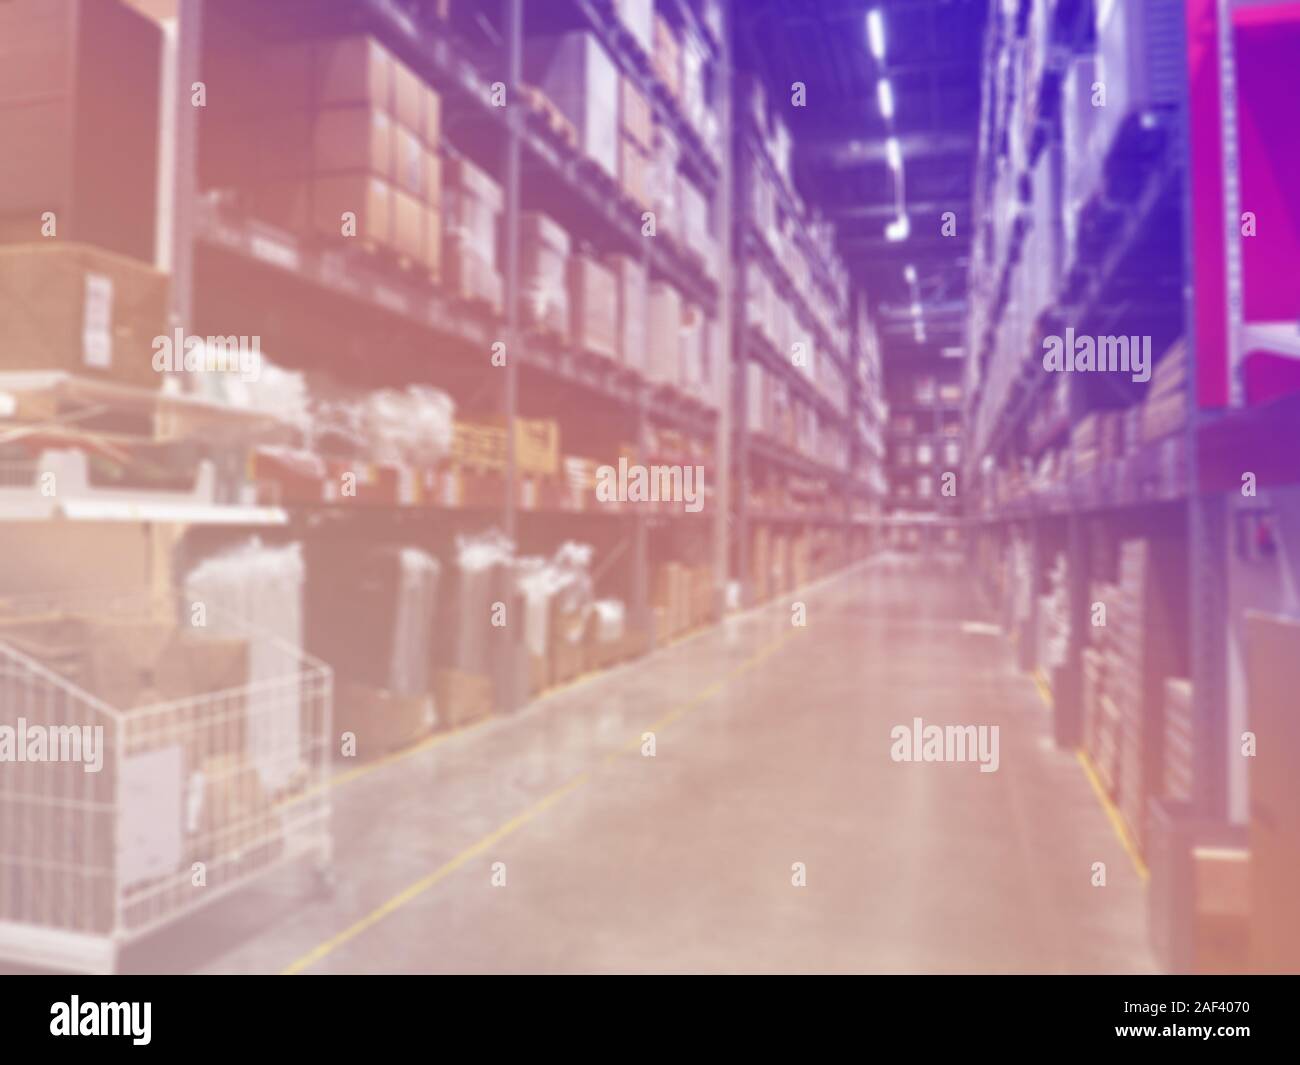 Shelf Storage in hypermarket interior blur background. warehouse with shelves blurred with illumination, logistics, background Stock Photo